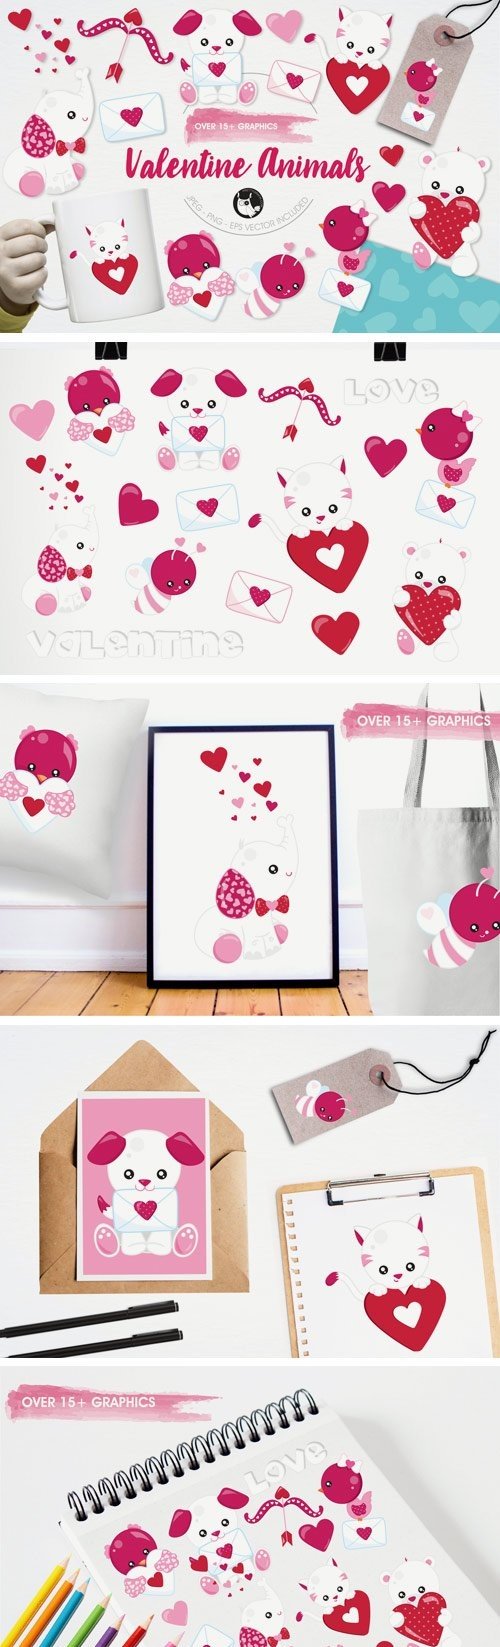 Designbundles - Valentine Animals Graphics and Illustrations 14606